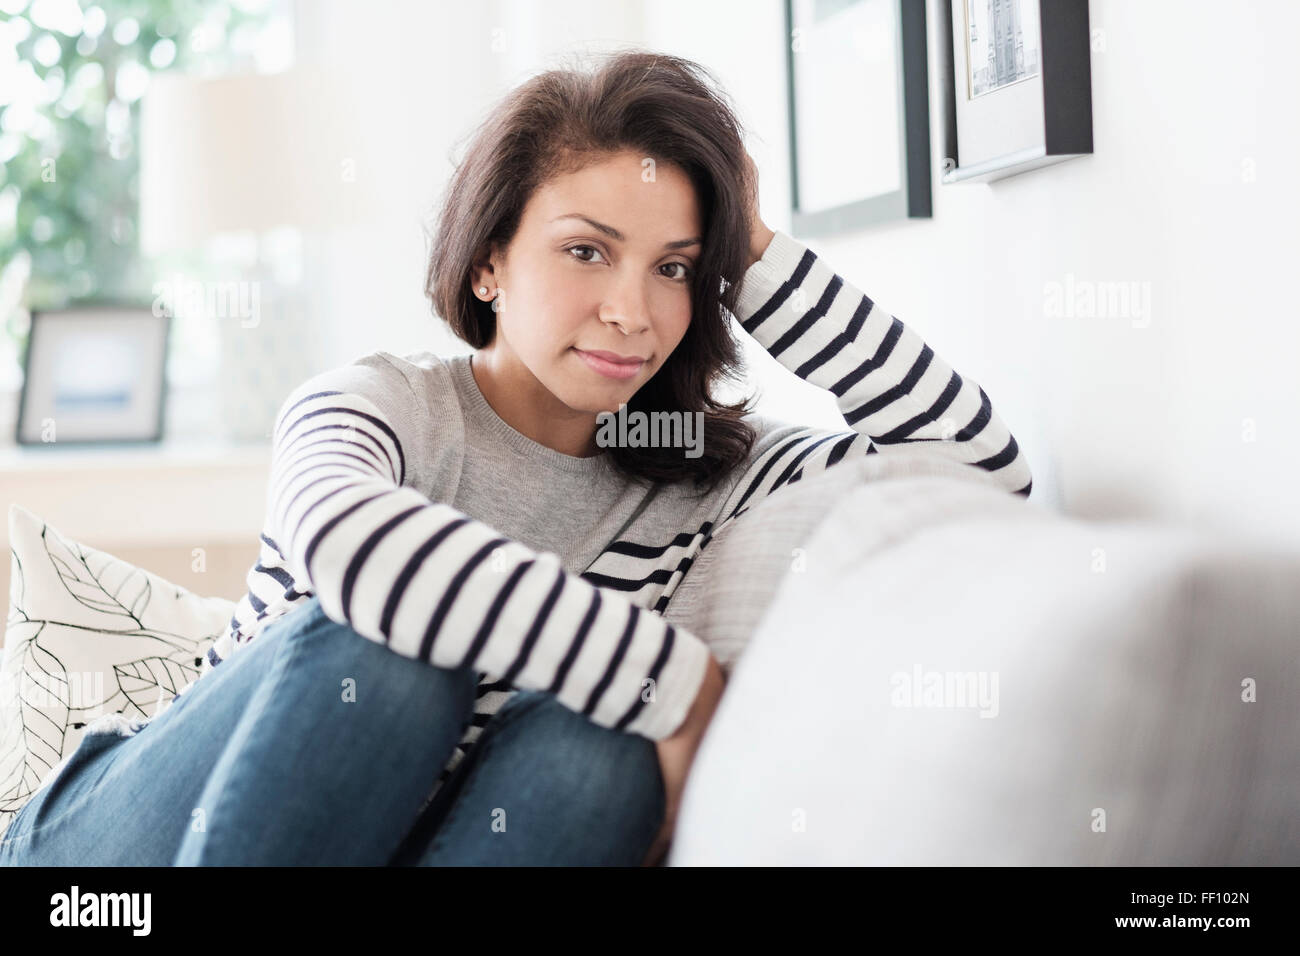 Mixed race woman sitting on sofa Stock Photo